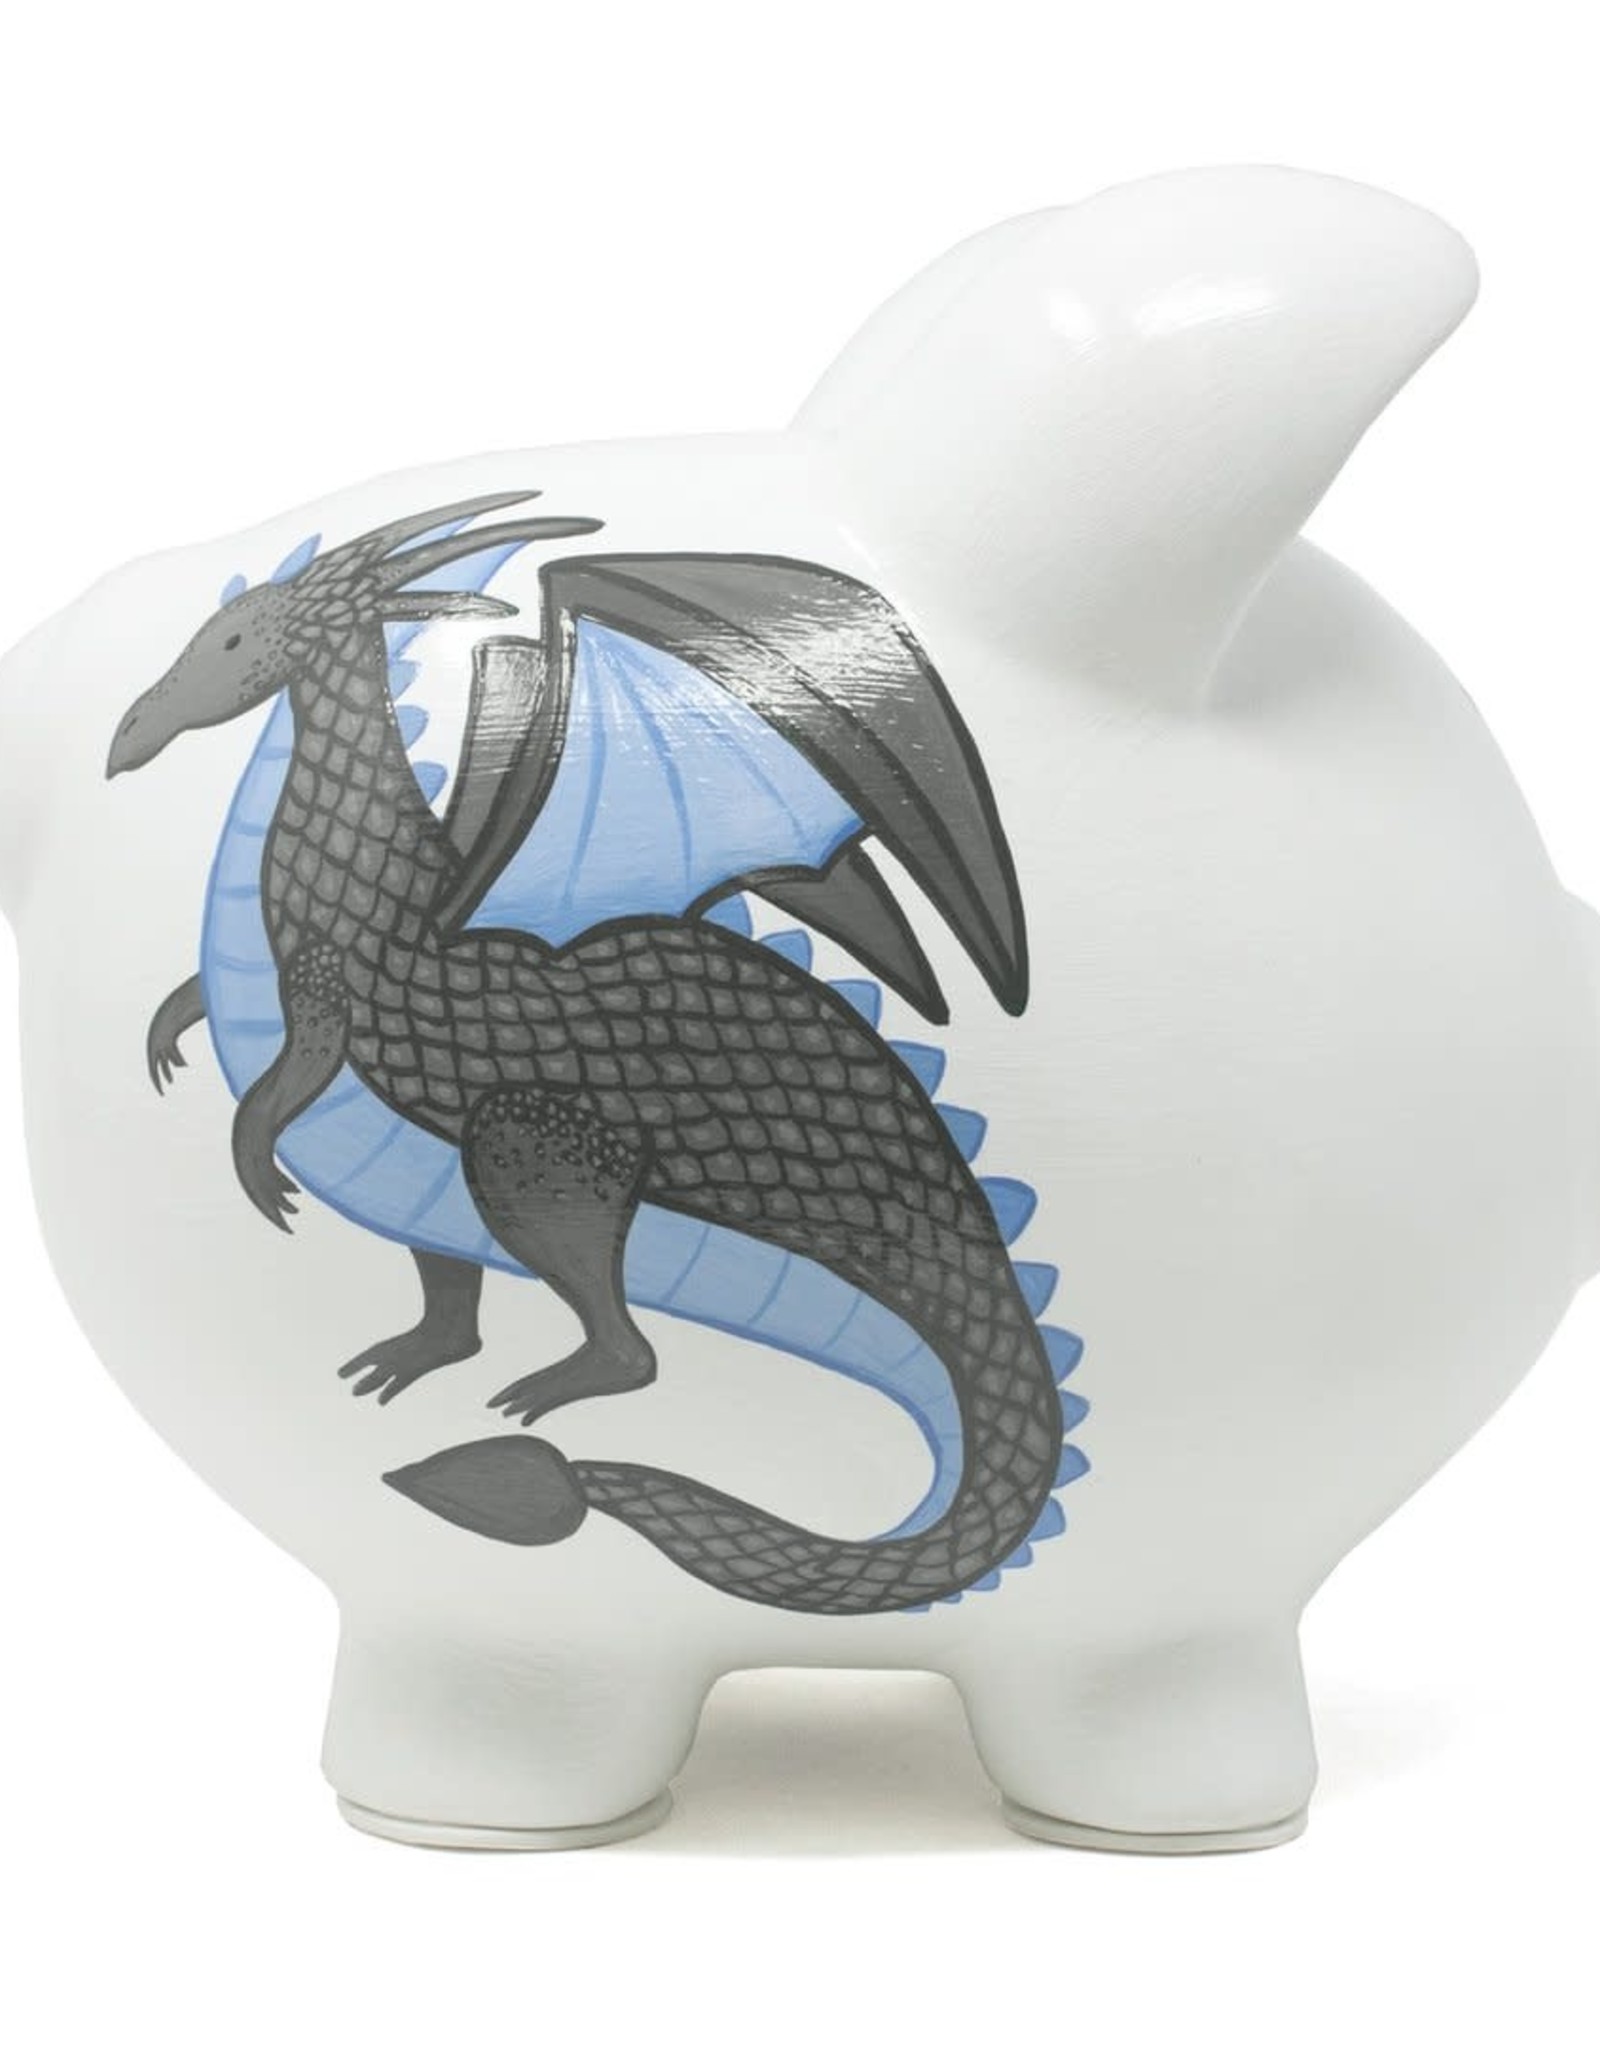 Child to Cherish Bank Mythical Dragon